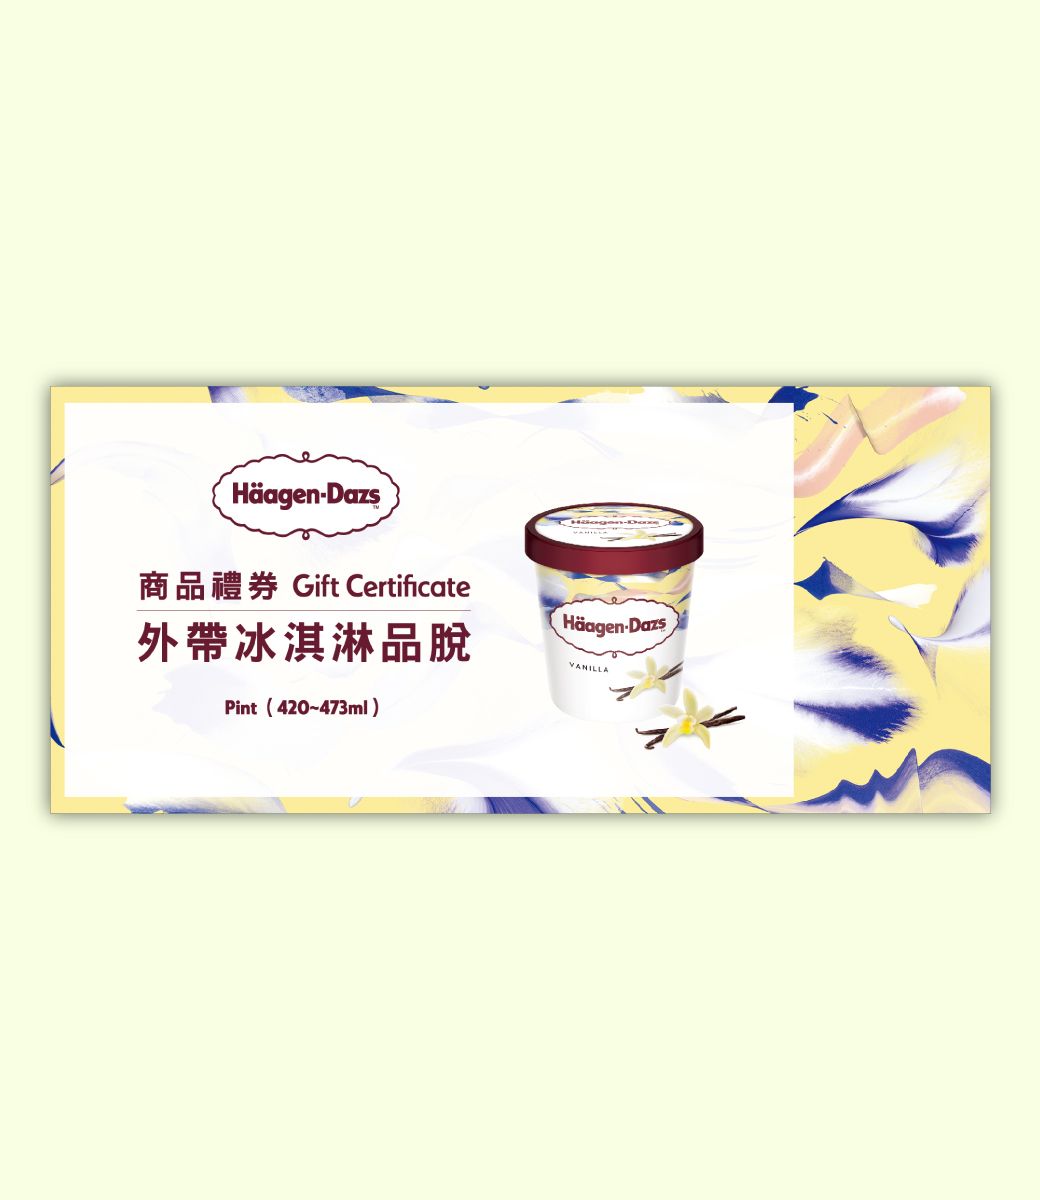 HäagenDazs商品禮券 Gift Certificate外帶冰淇淋品脫Pint (420-473ml)Häagen-Dazs